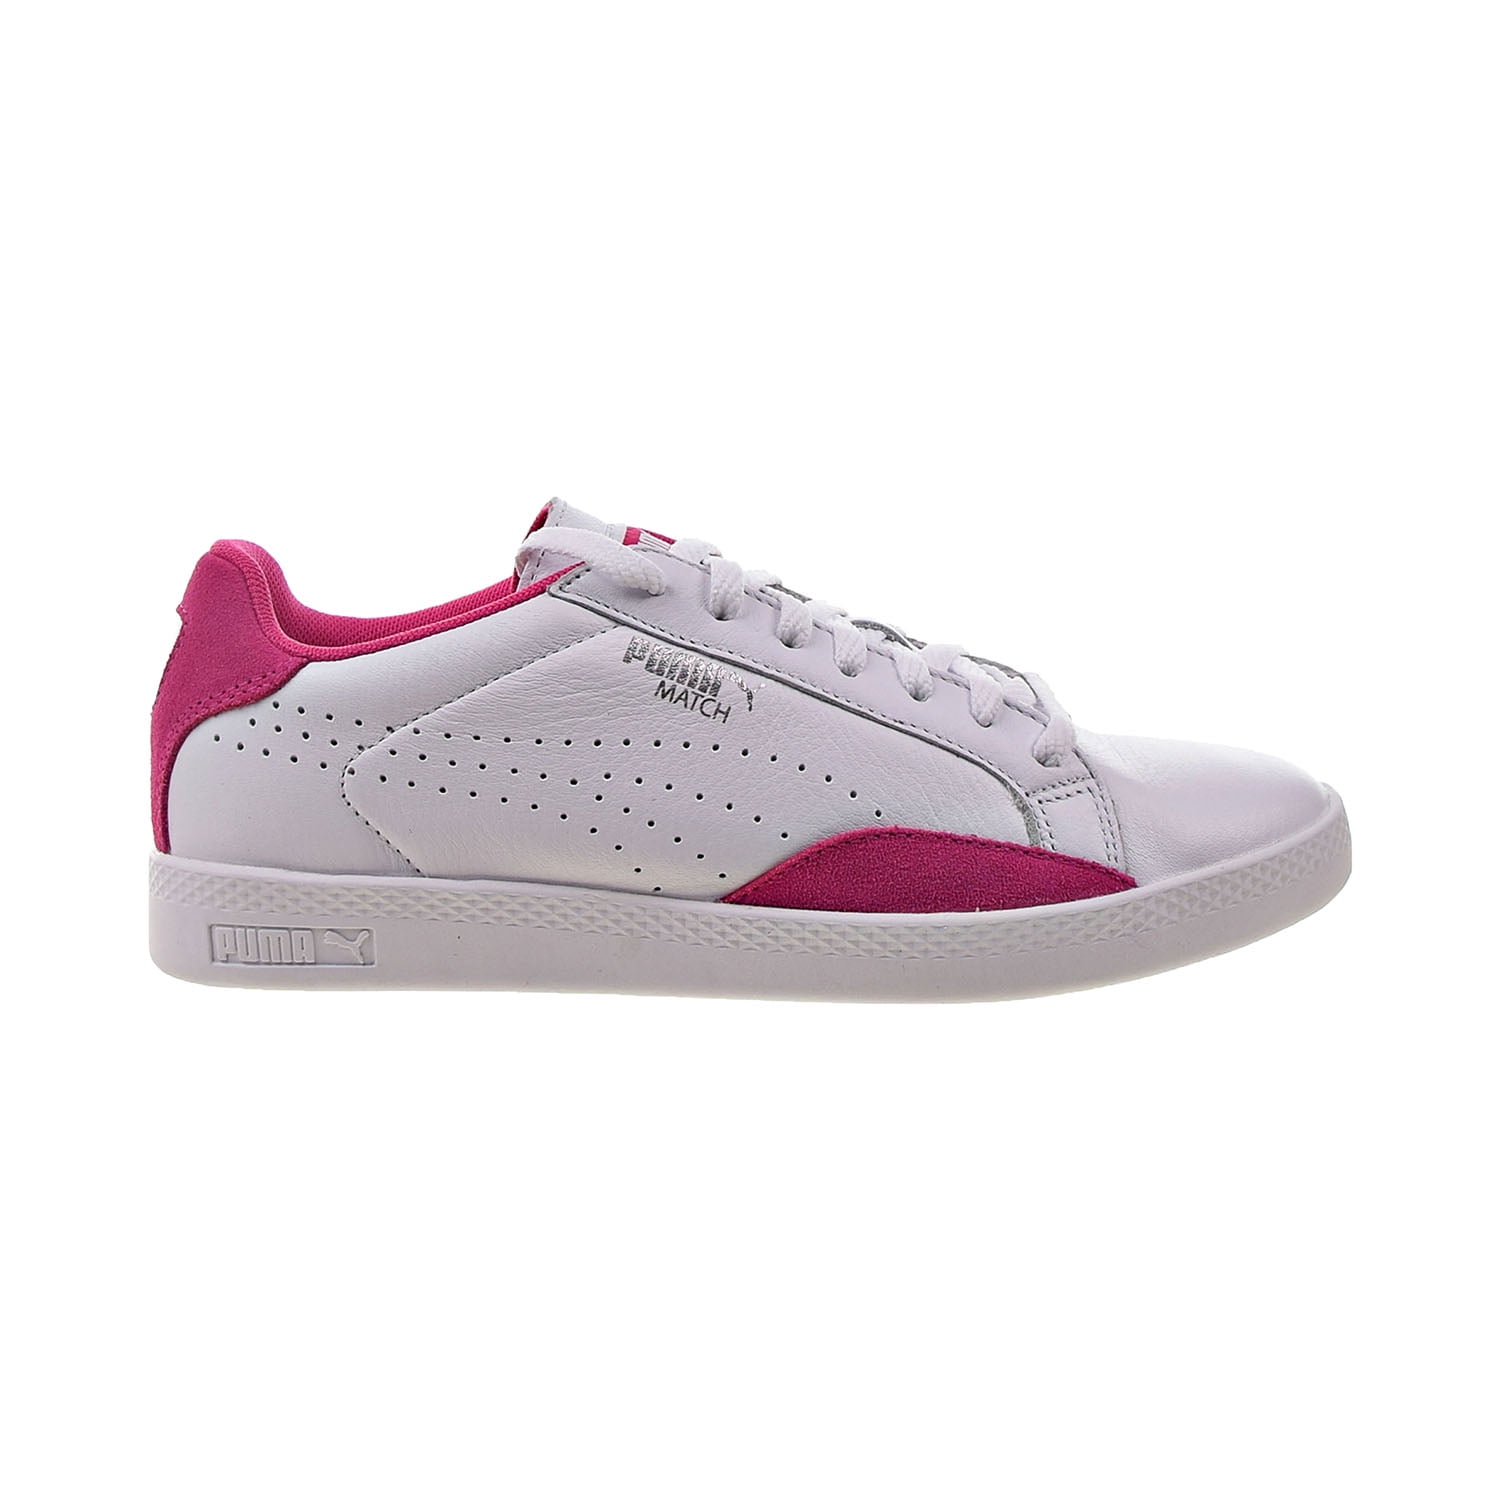 Puma Match Lo Basic Sports Women's Shoes Size